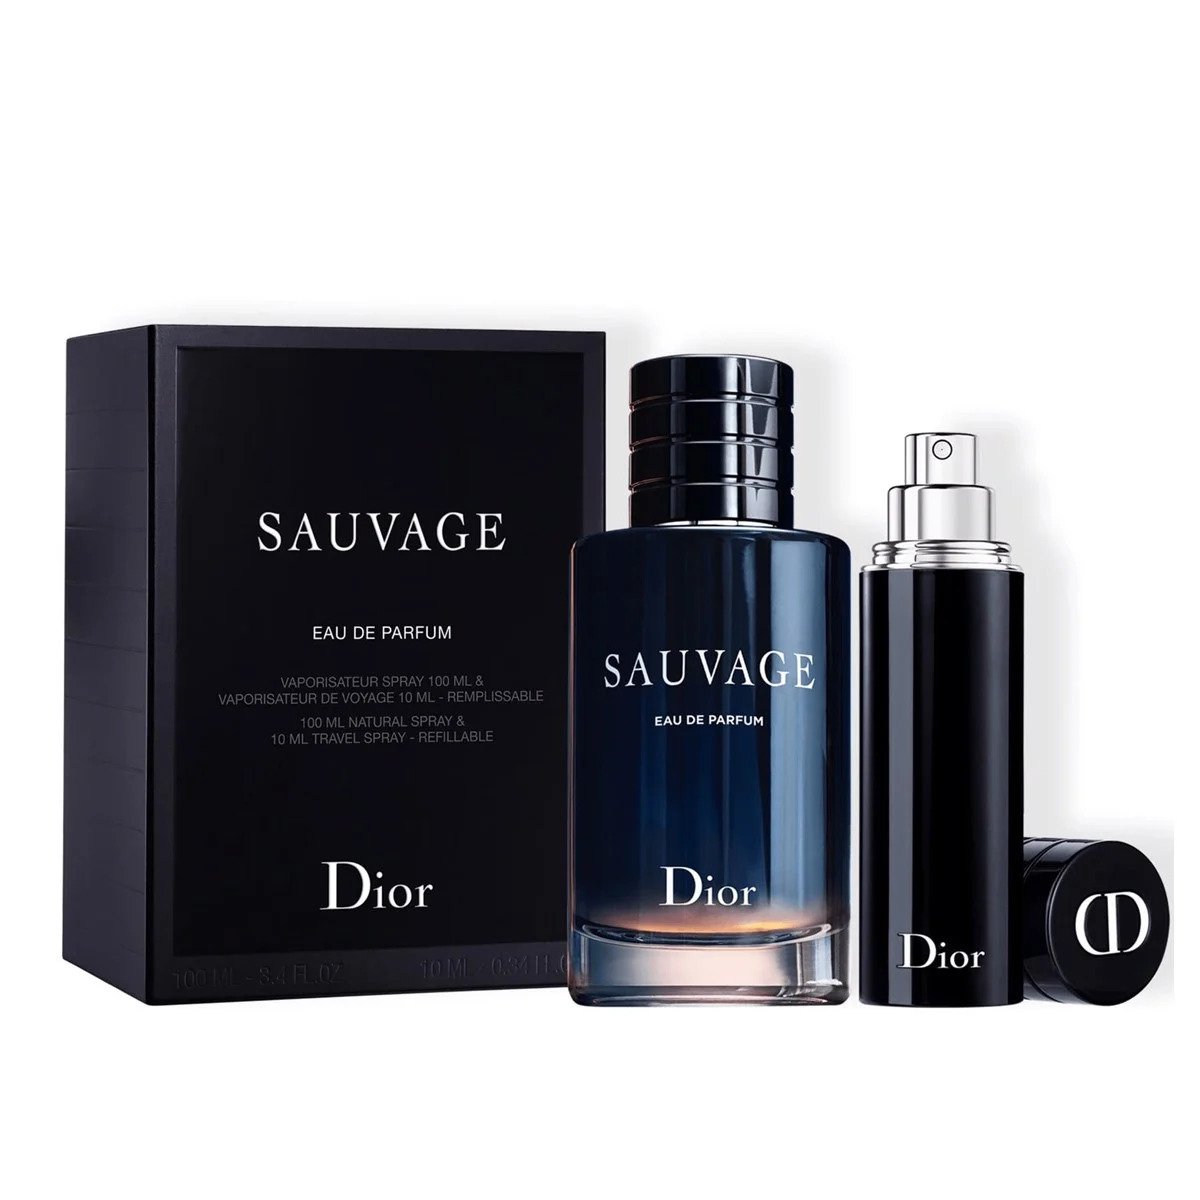 Giftset Dior Sauvage Eau De Parfum - Nước Hoa 100ml + Ống Xịt 10ml (tặng kèm vỏ ống xịt 10ml)